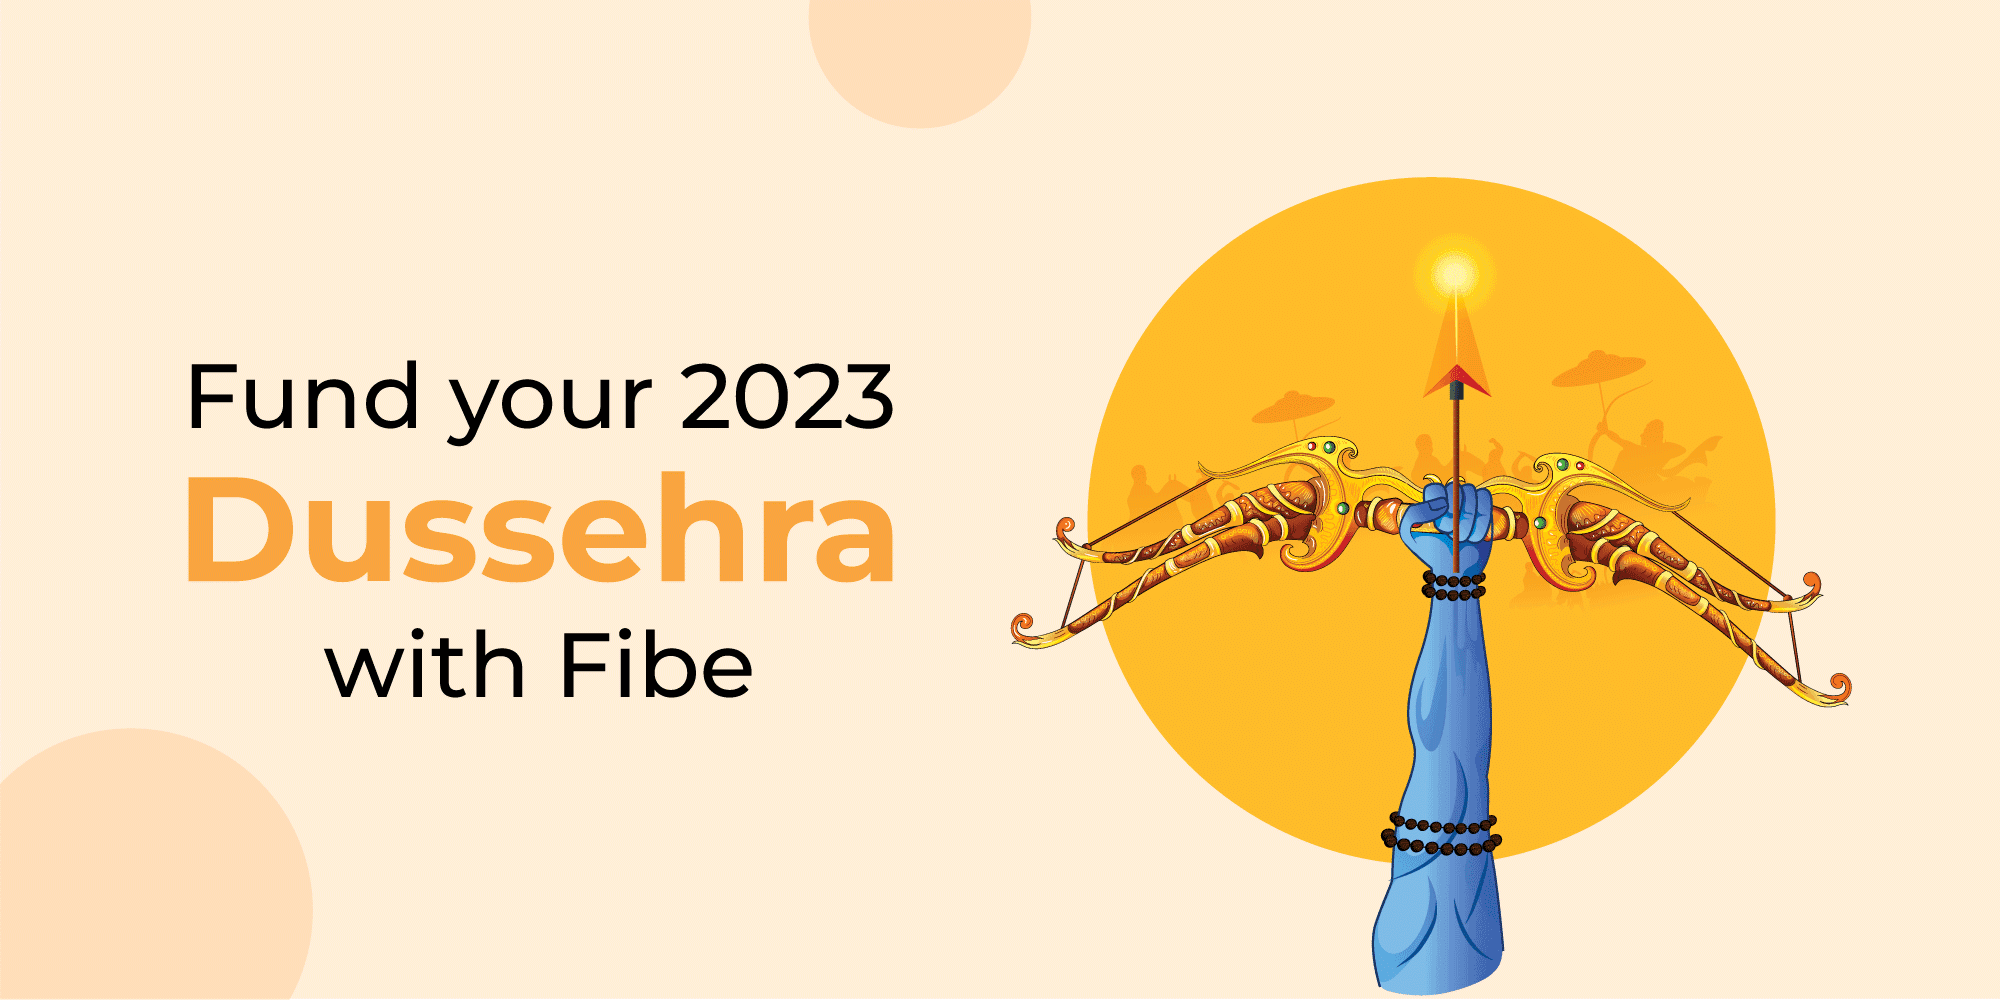 Dussehra 2023: 6 ways to celebrate Dussehra holiday in 2023